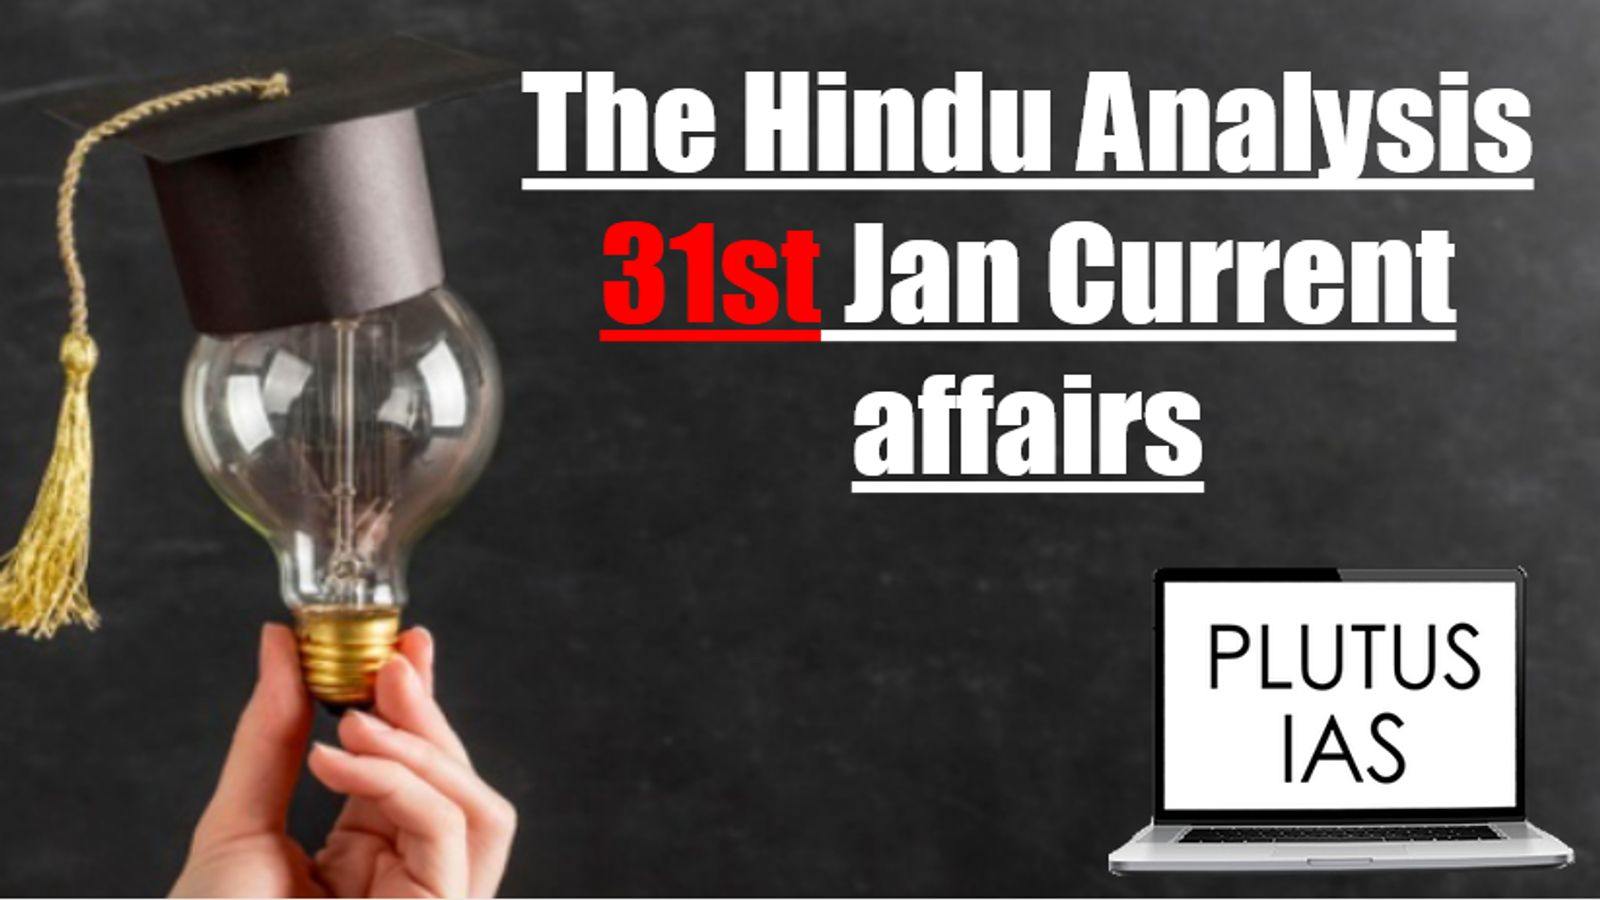 The Hindu Analysis 31st January